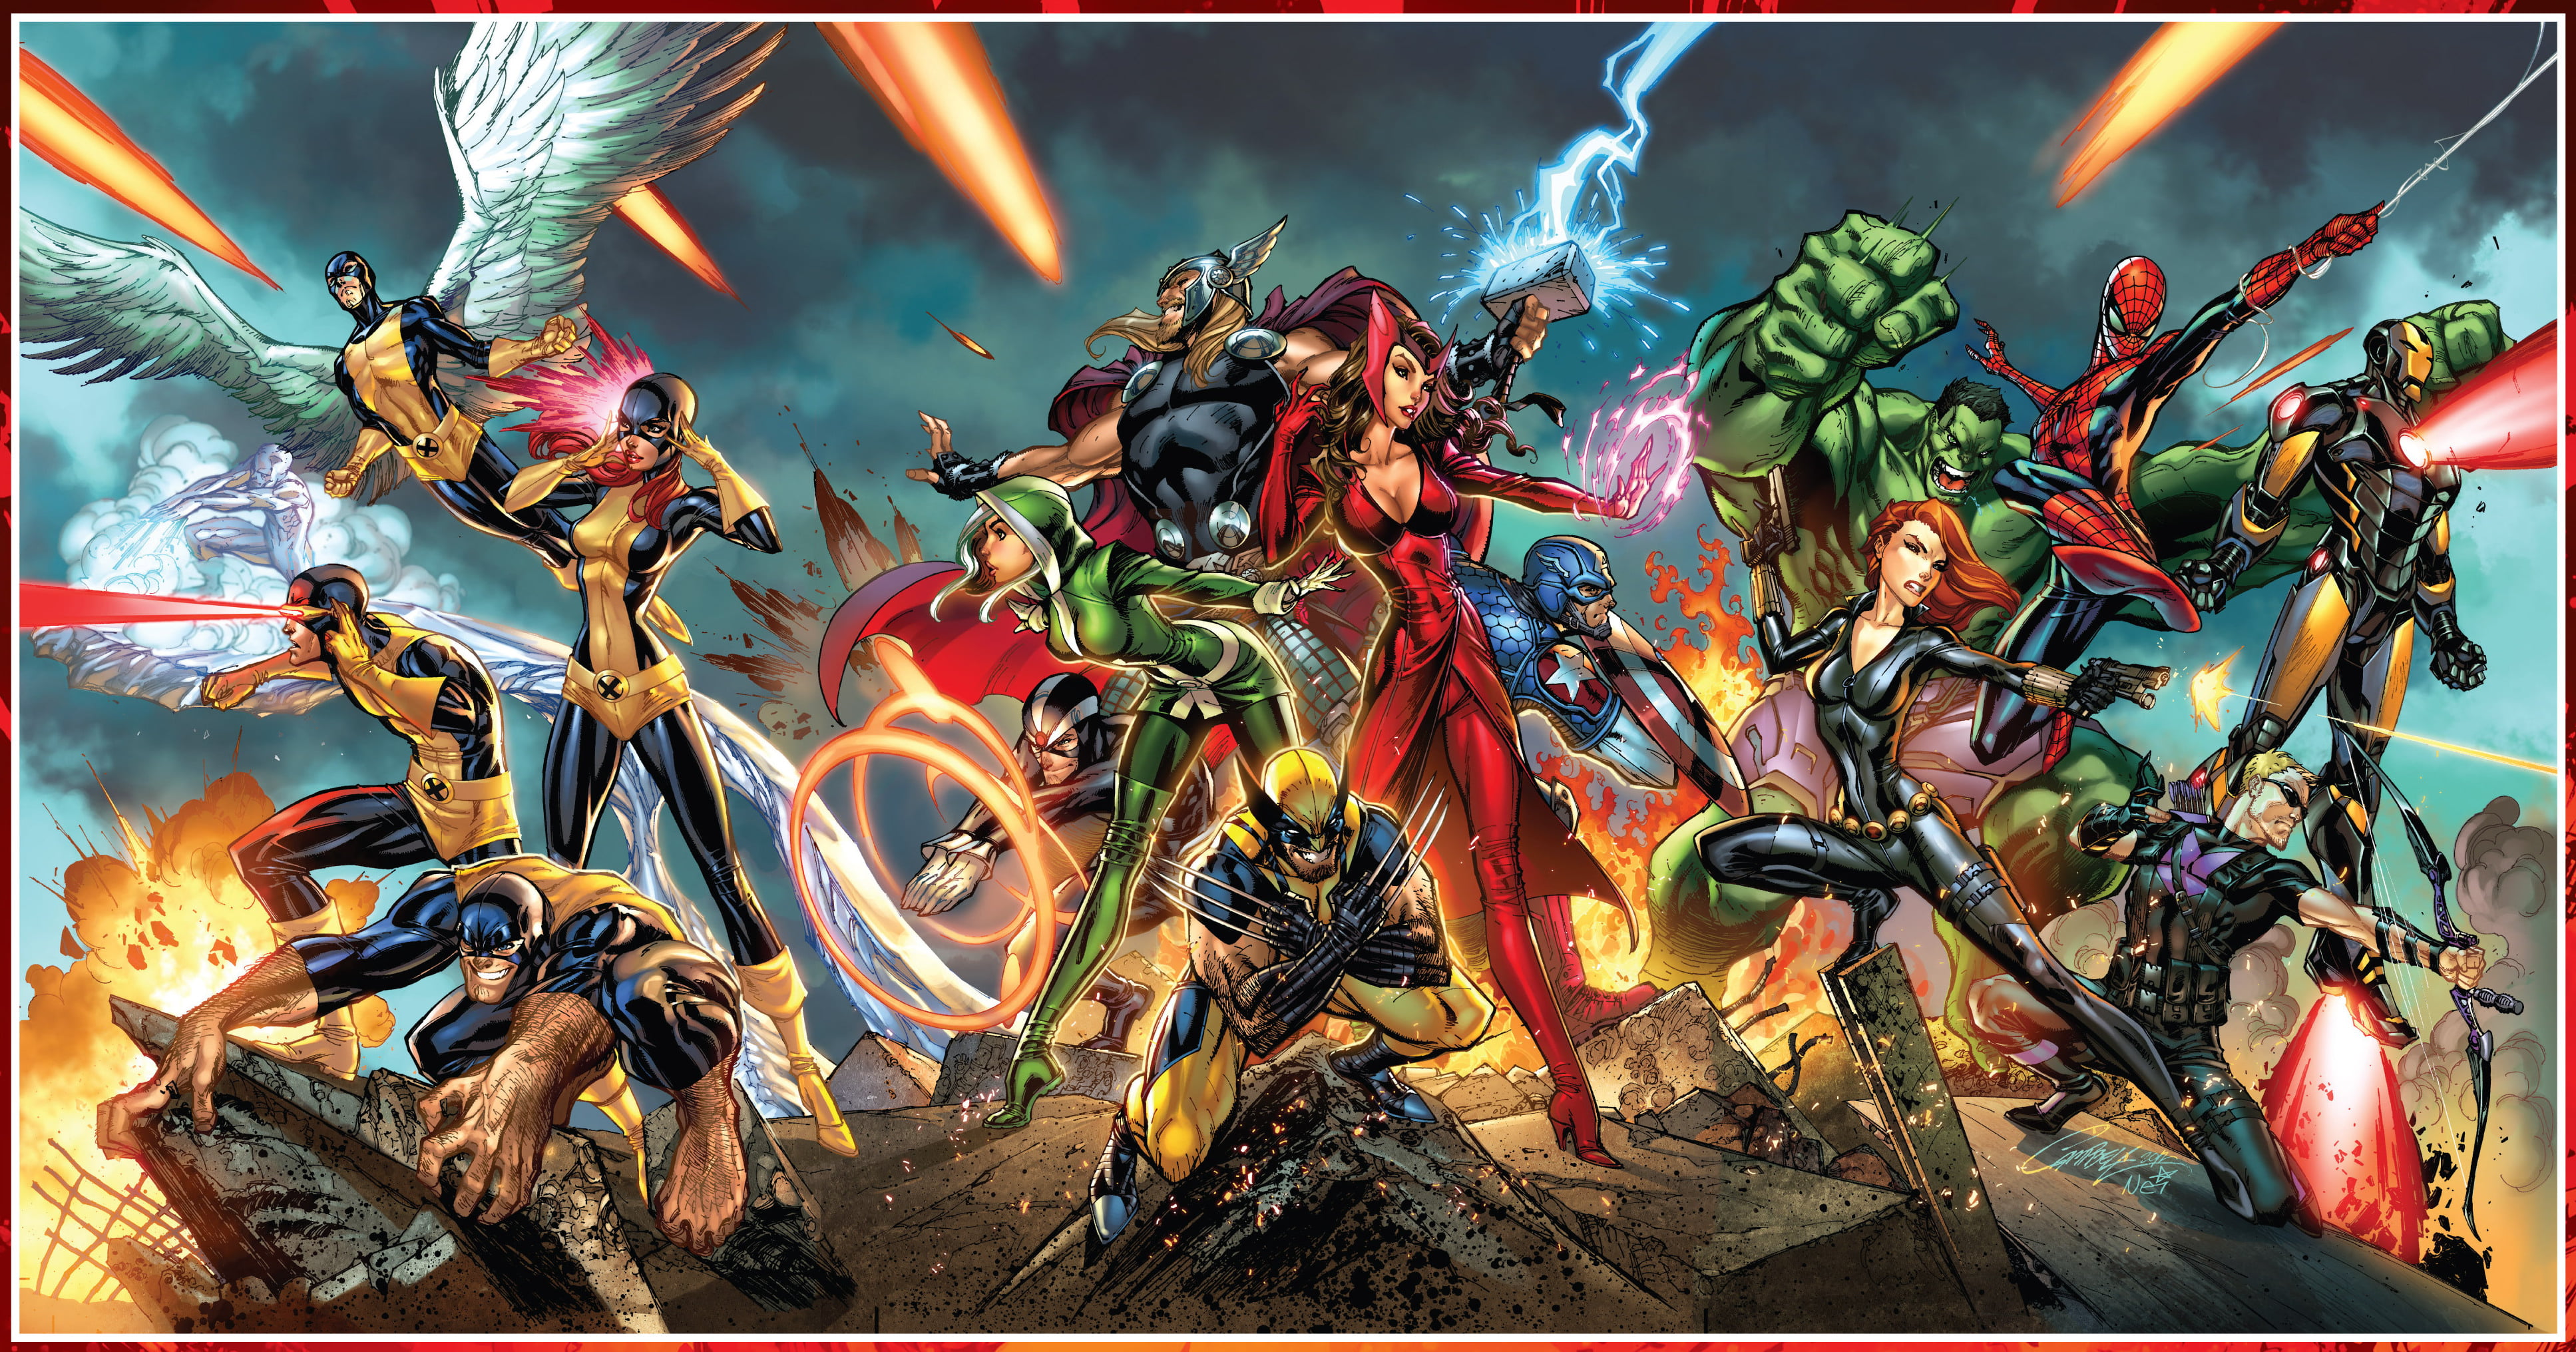 DC Heroes wallpaper, X-men characters painting, Marvel Comics